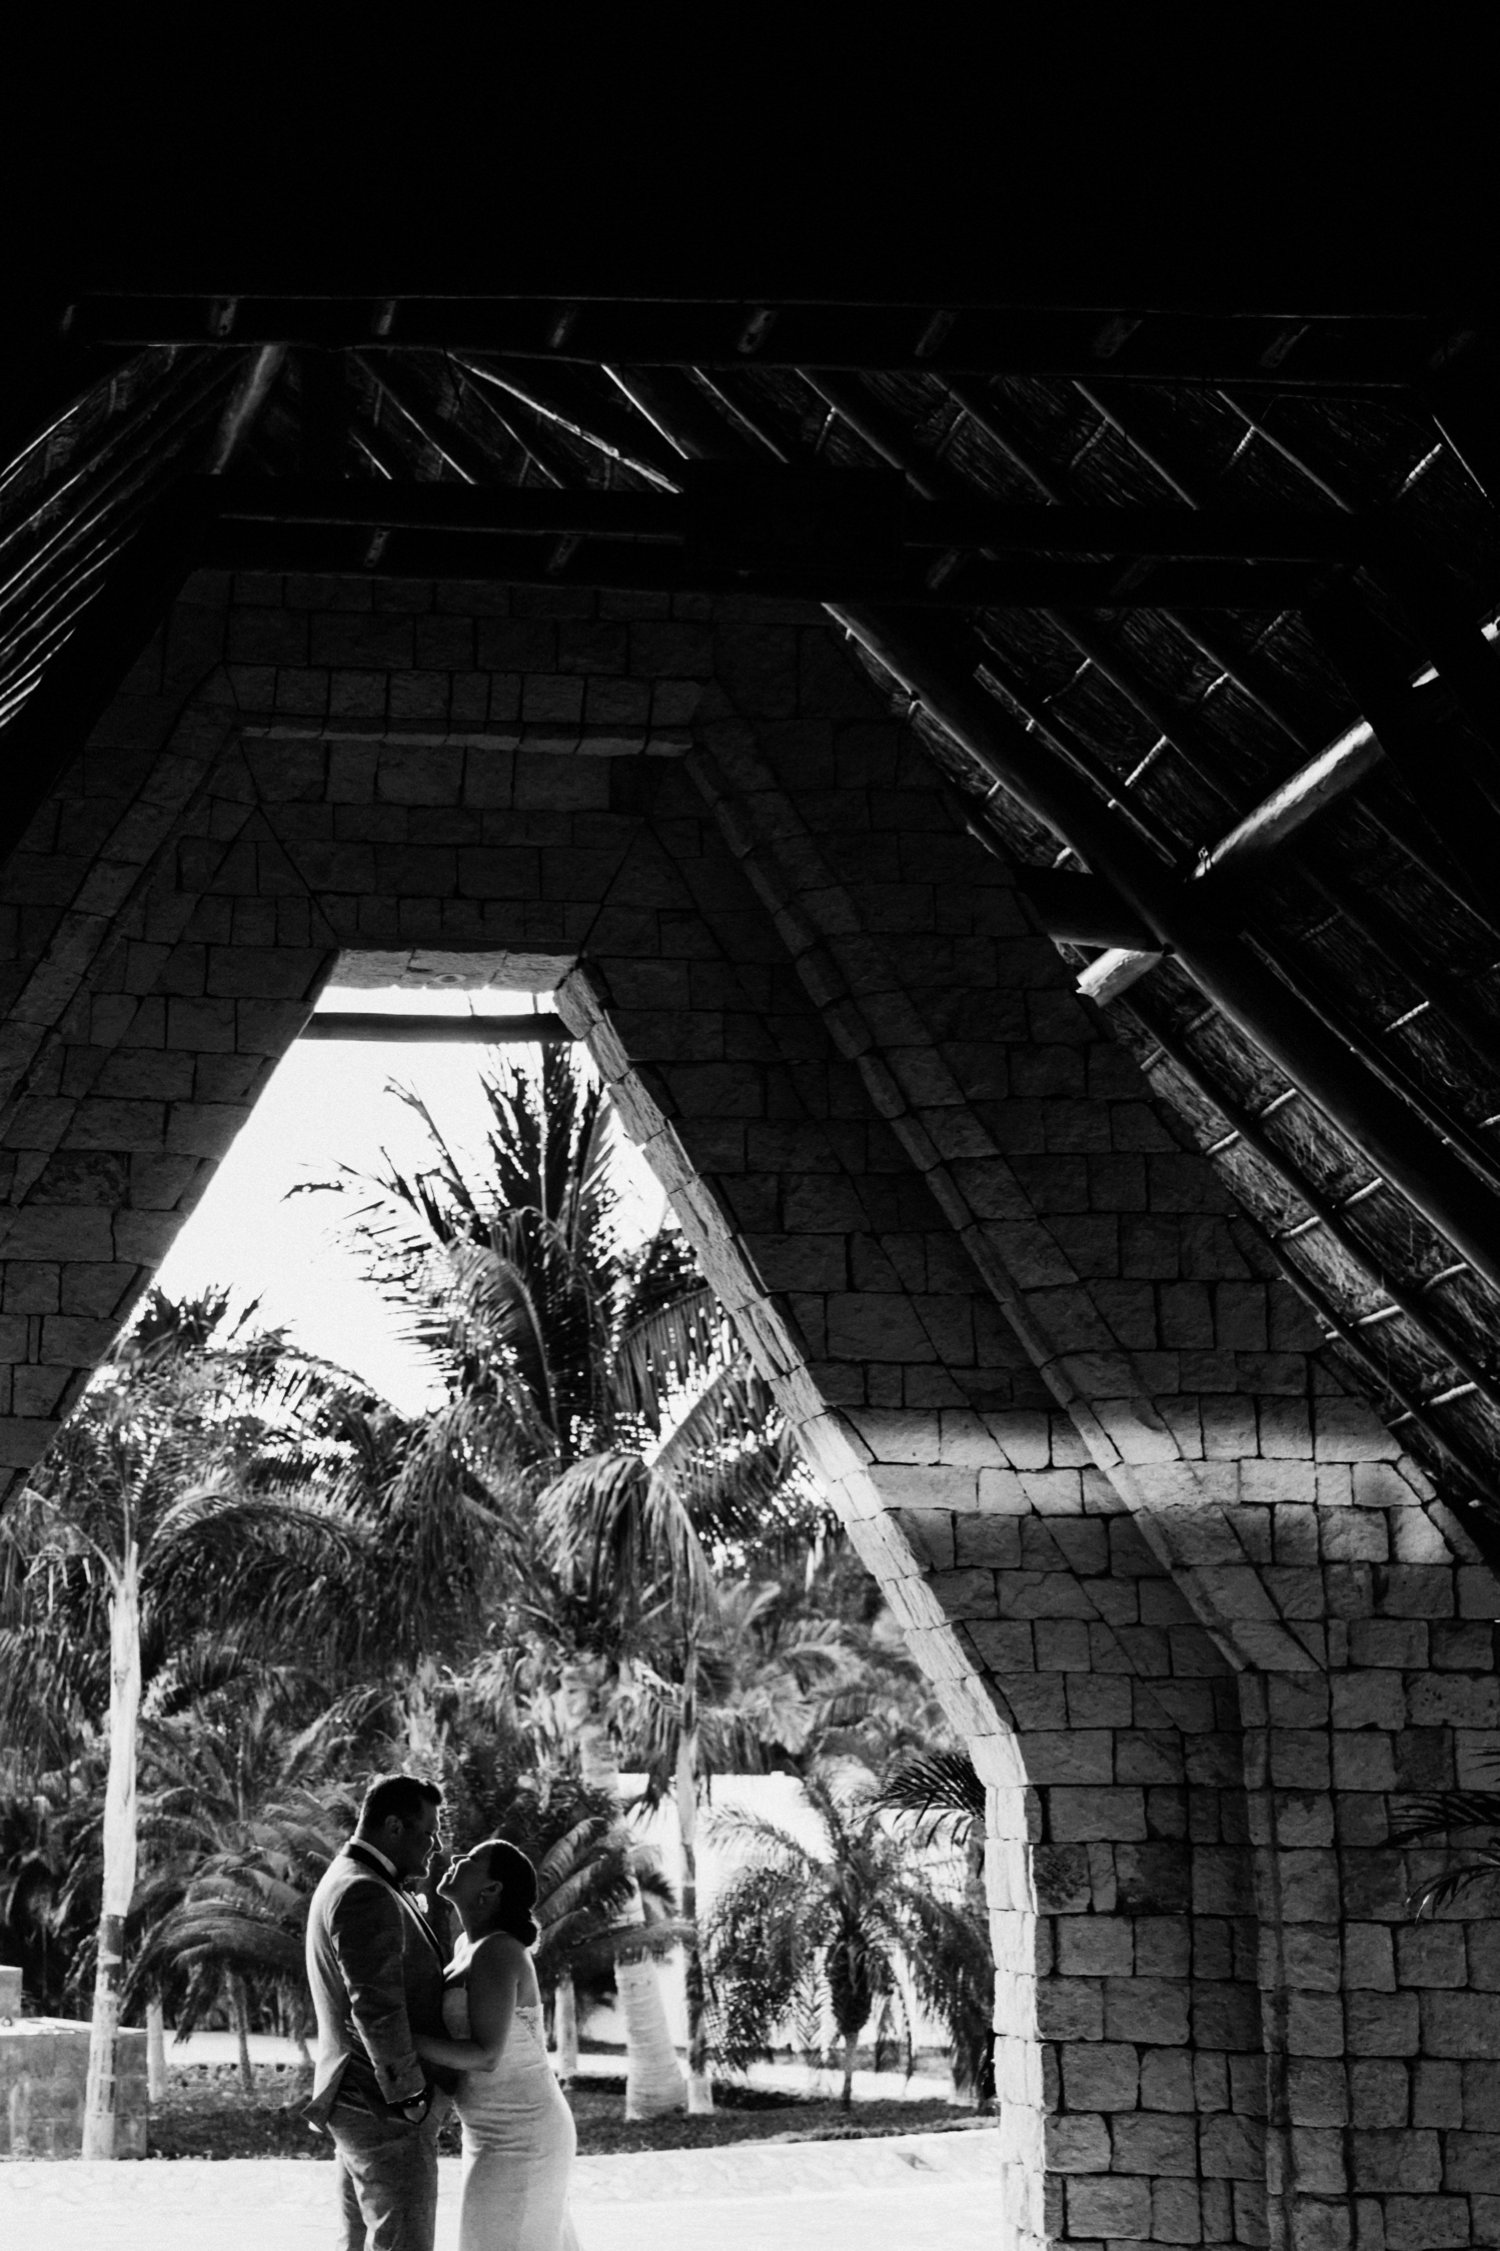  images by feliciathephotographer.com | destination wedding photographer | mexico | tropical | fiji | venue | azul beach resort | riviera maya | black and white bridal portraits | palm trees | contrast | stone building | grey suit | 